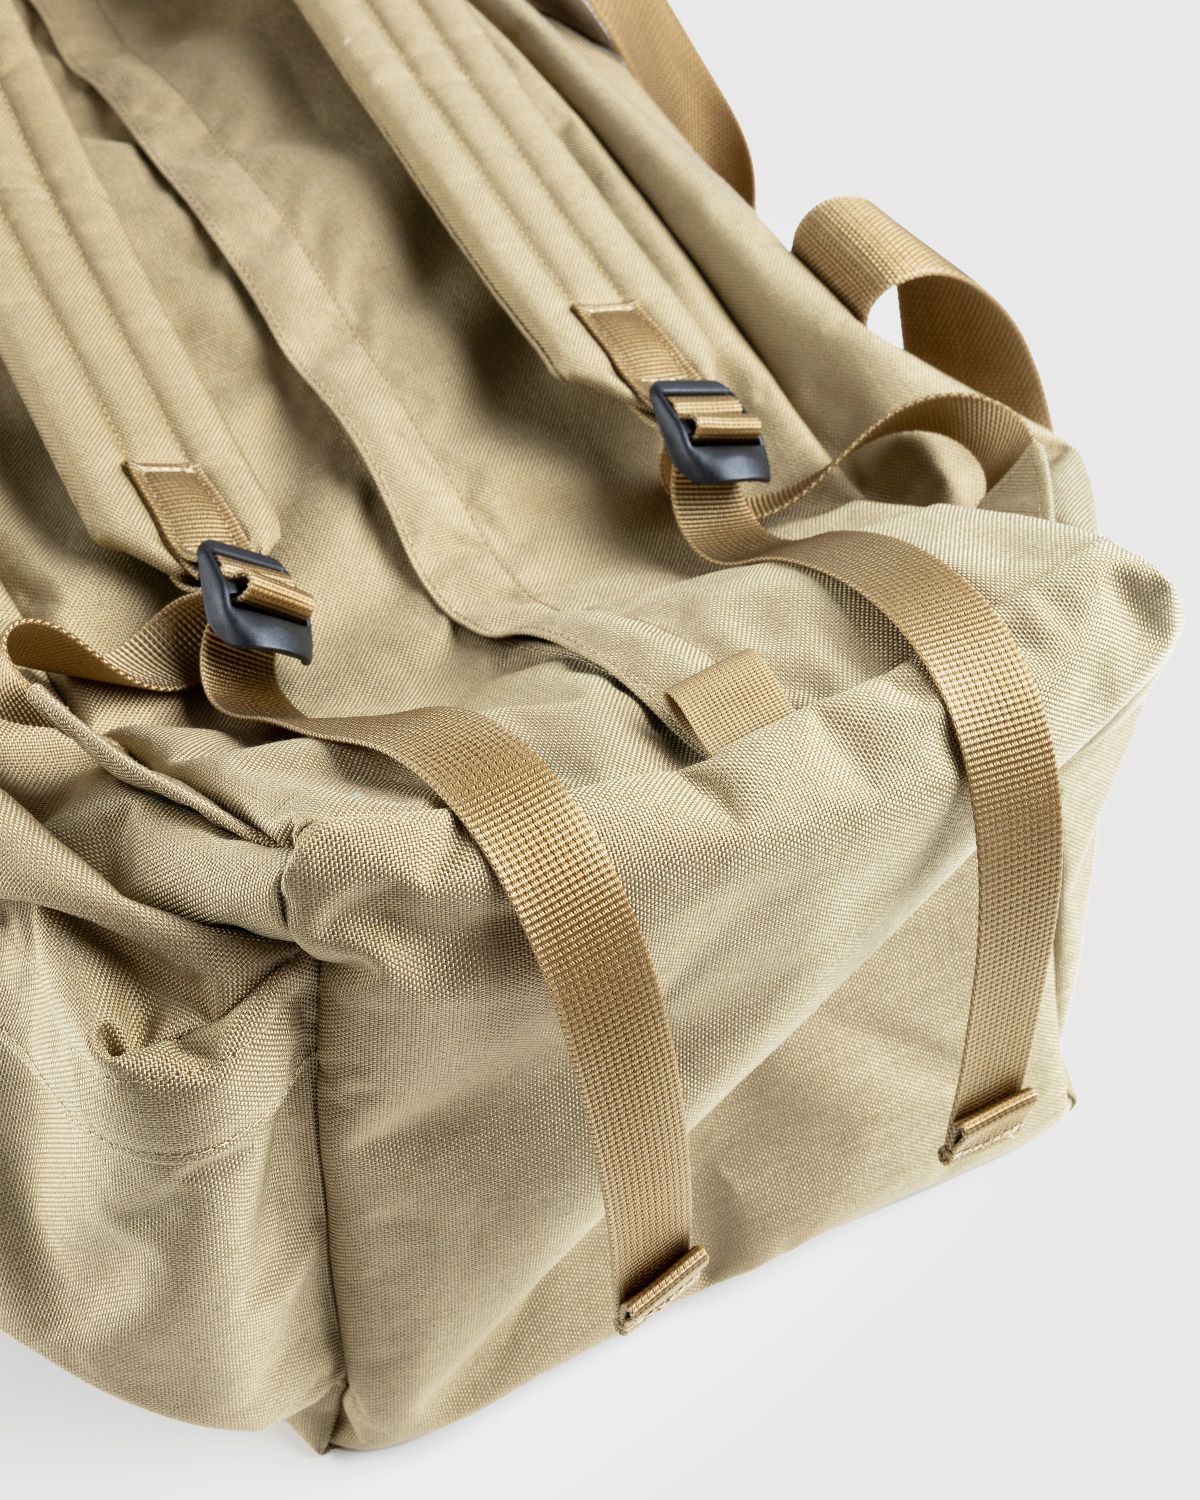 Auralee – Boston Bag Made By Aeta Beige